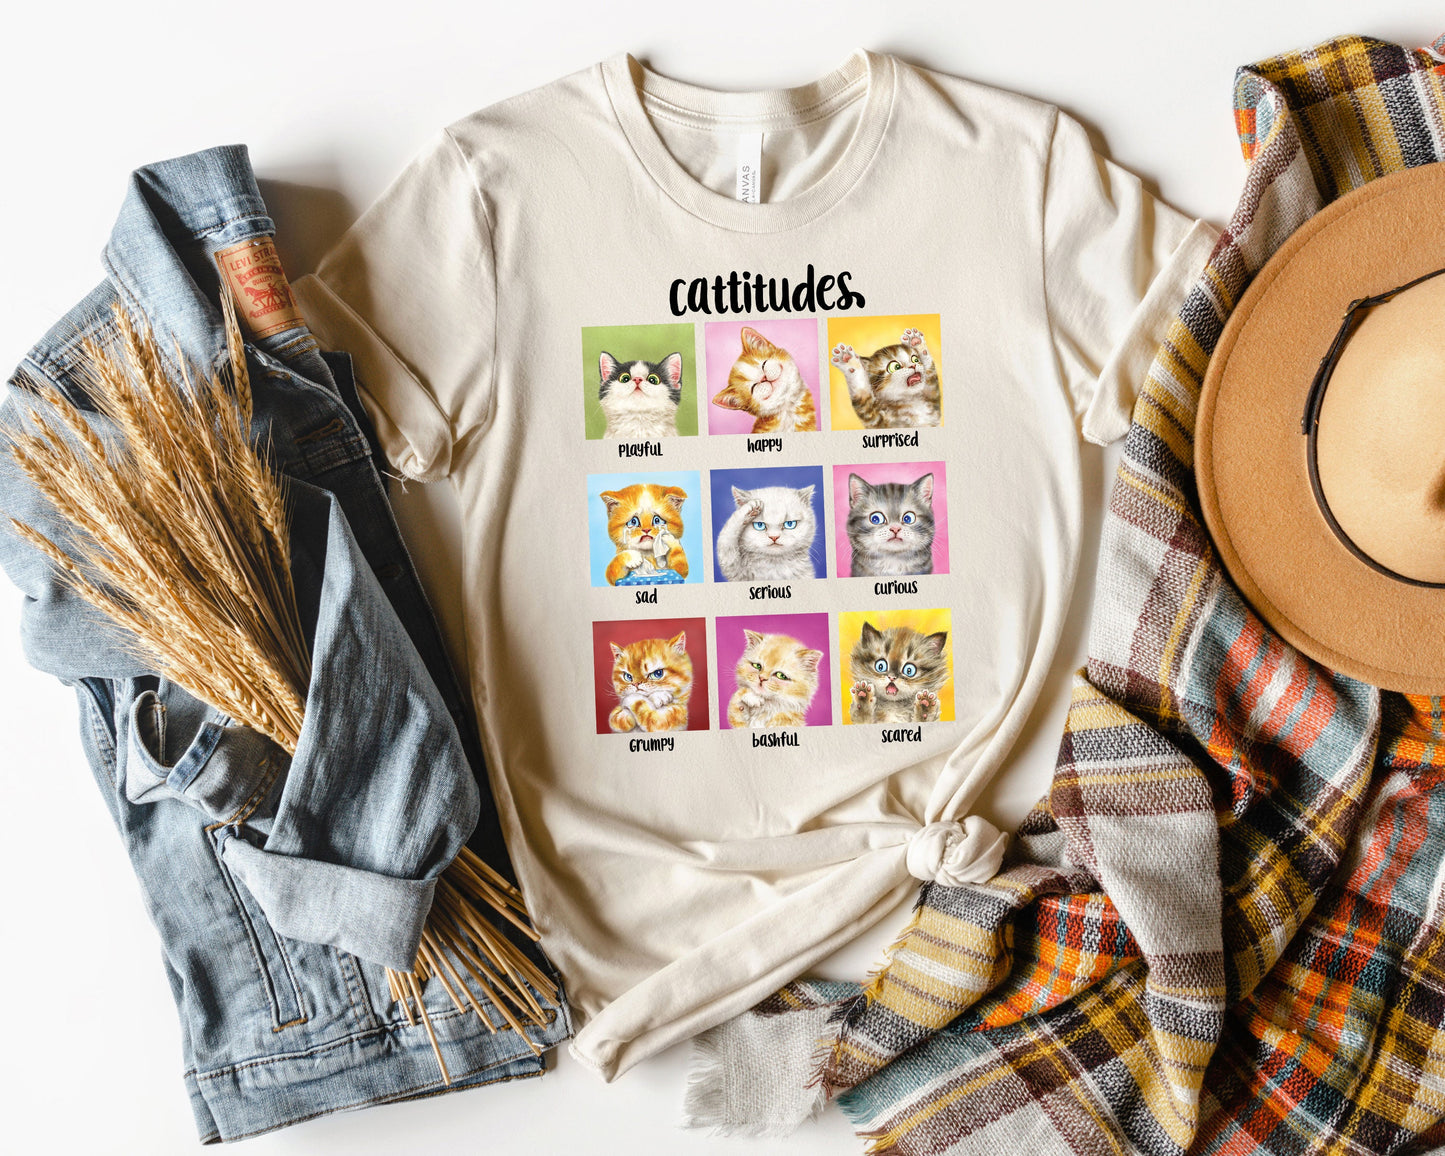 Cattitudes, Cats With Attitudes T-shirt